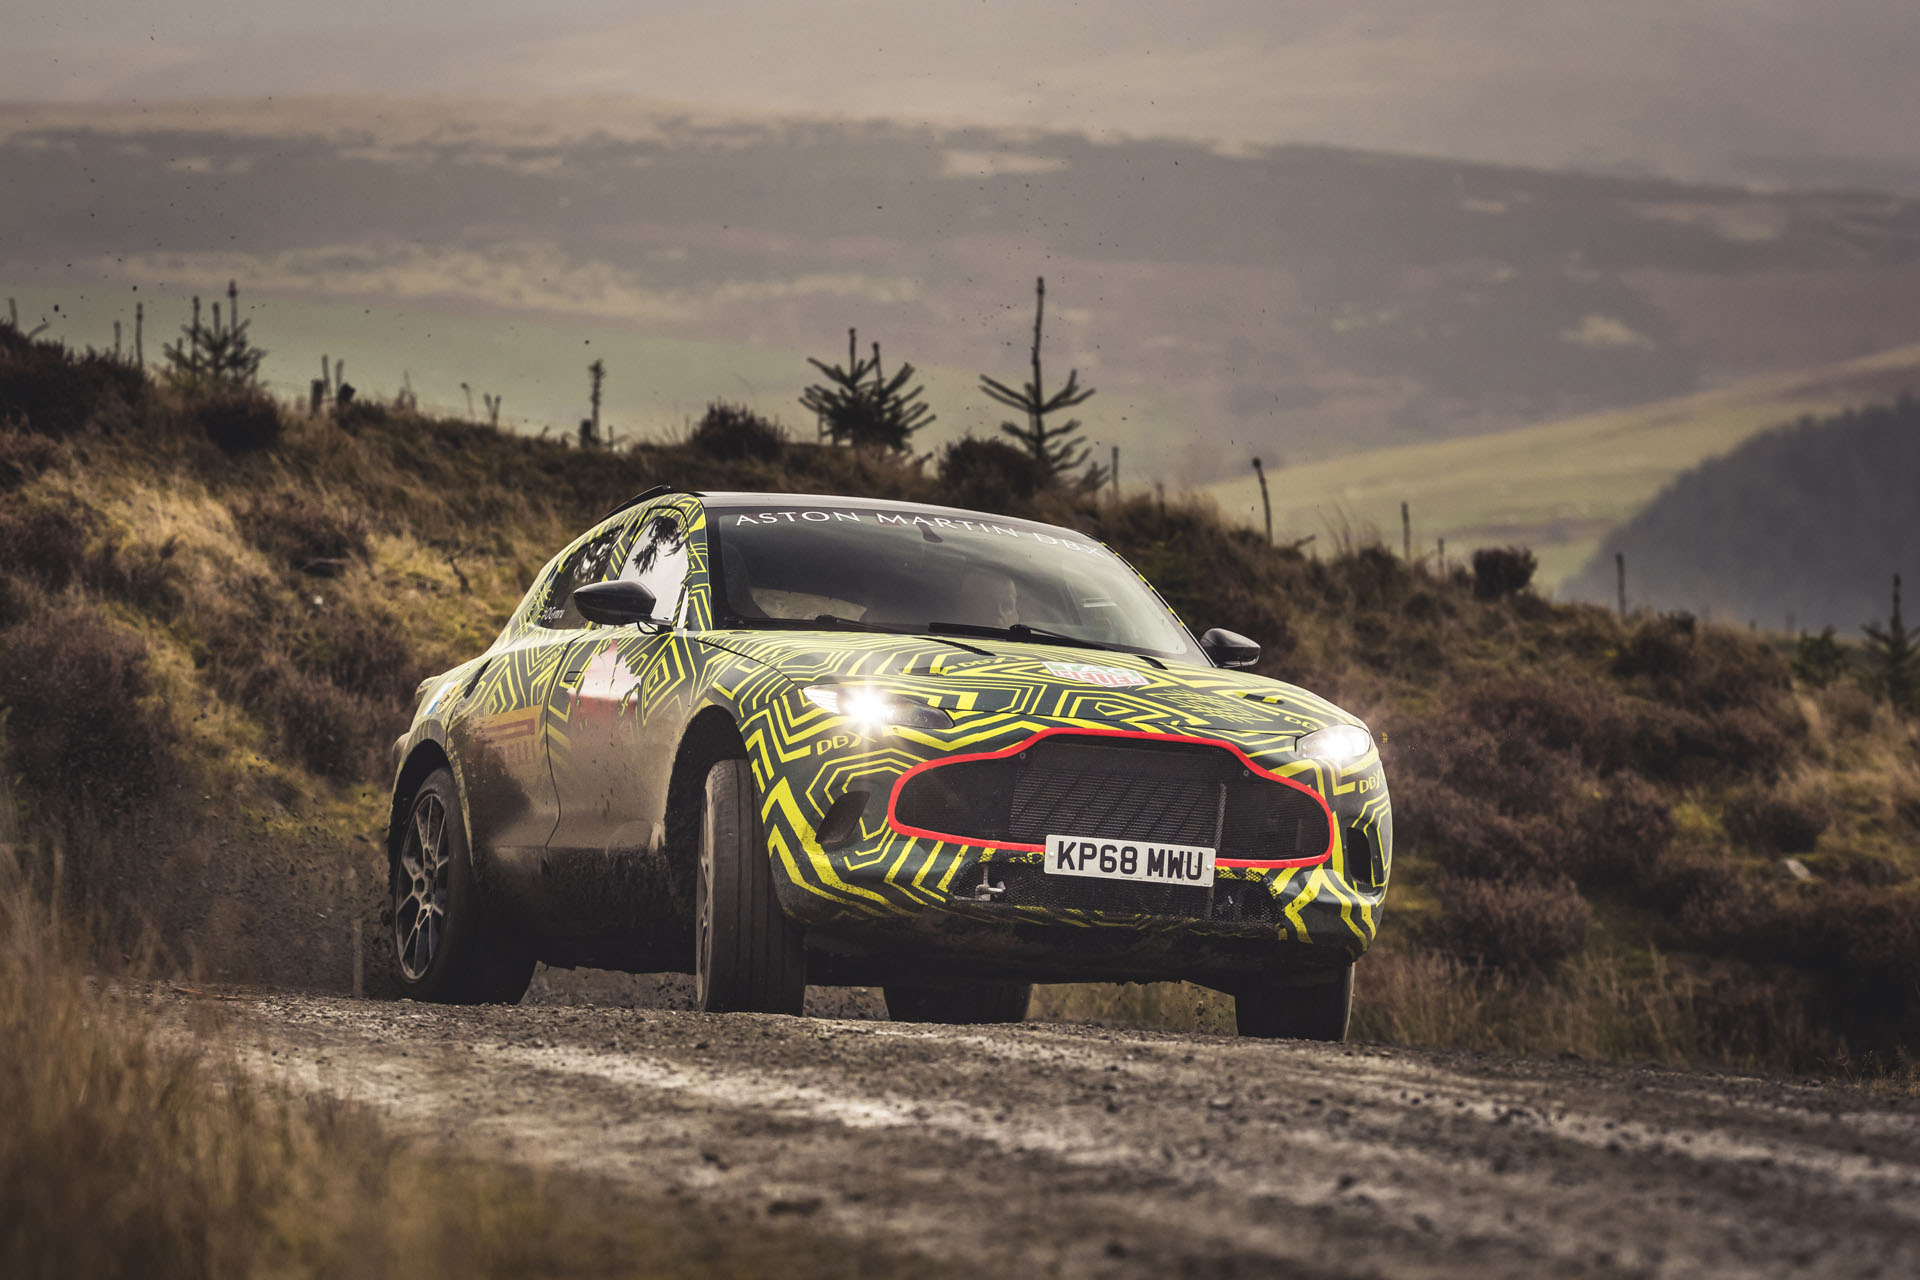 Aston Martin DBX – Czas na SUV-a